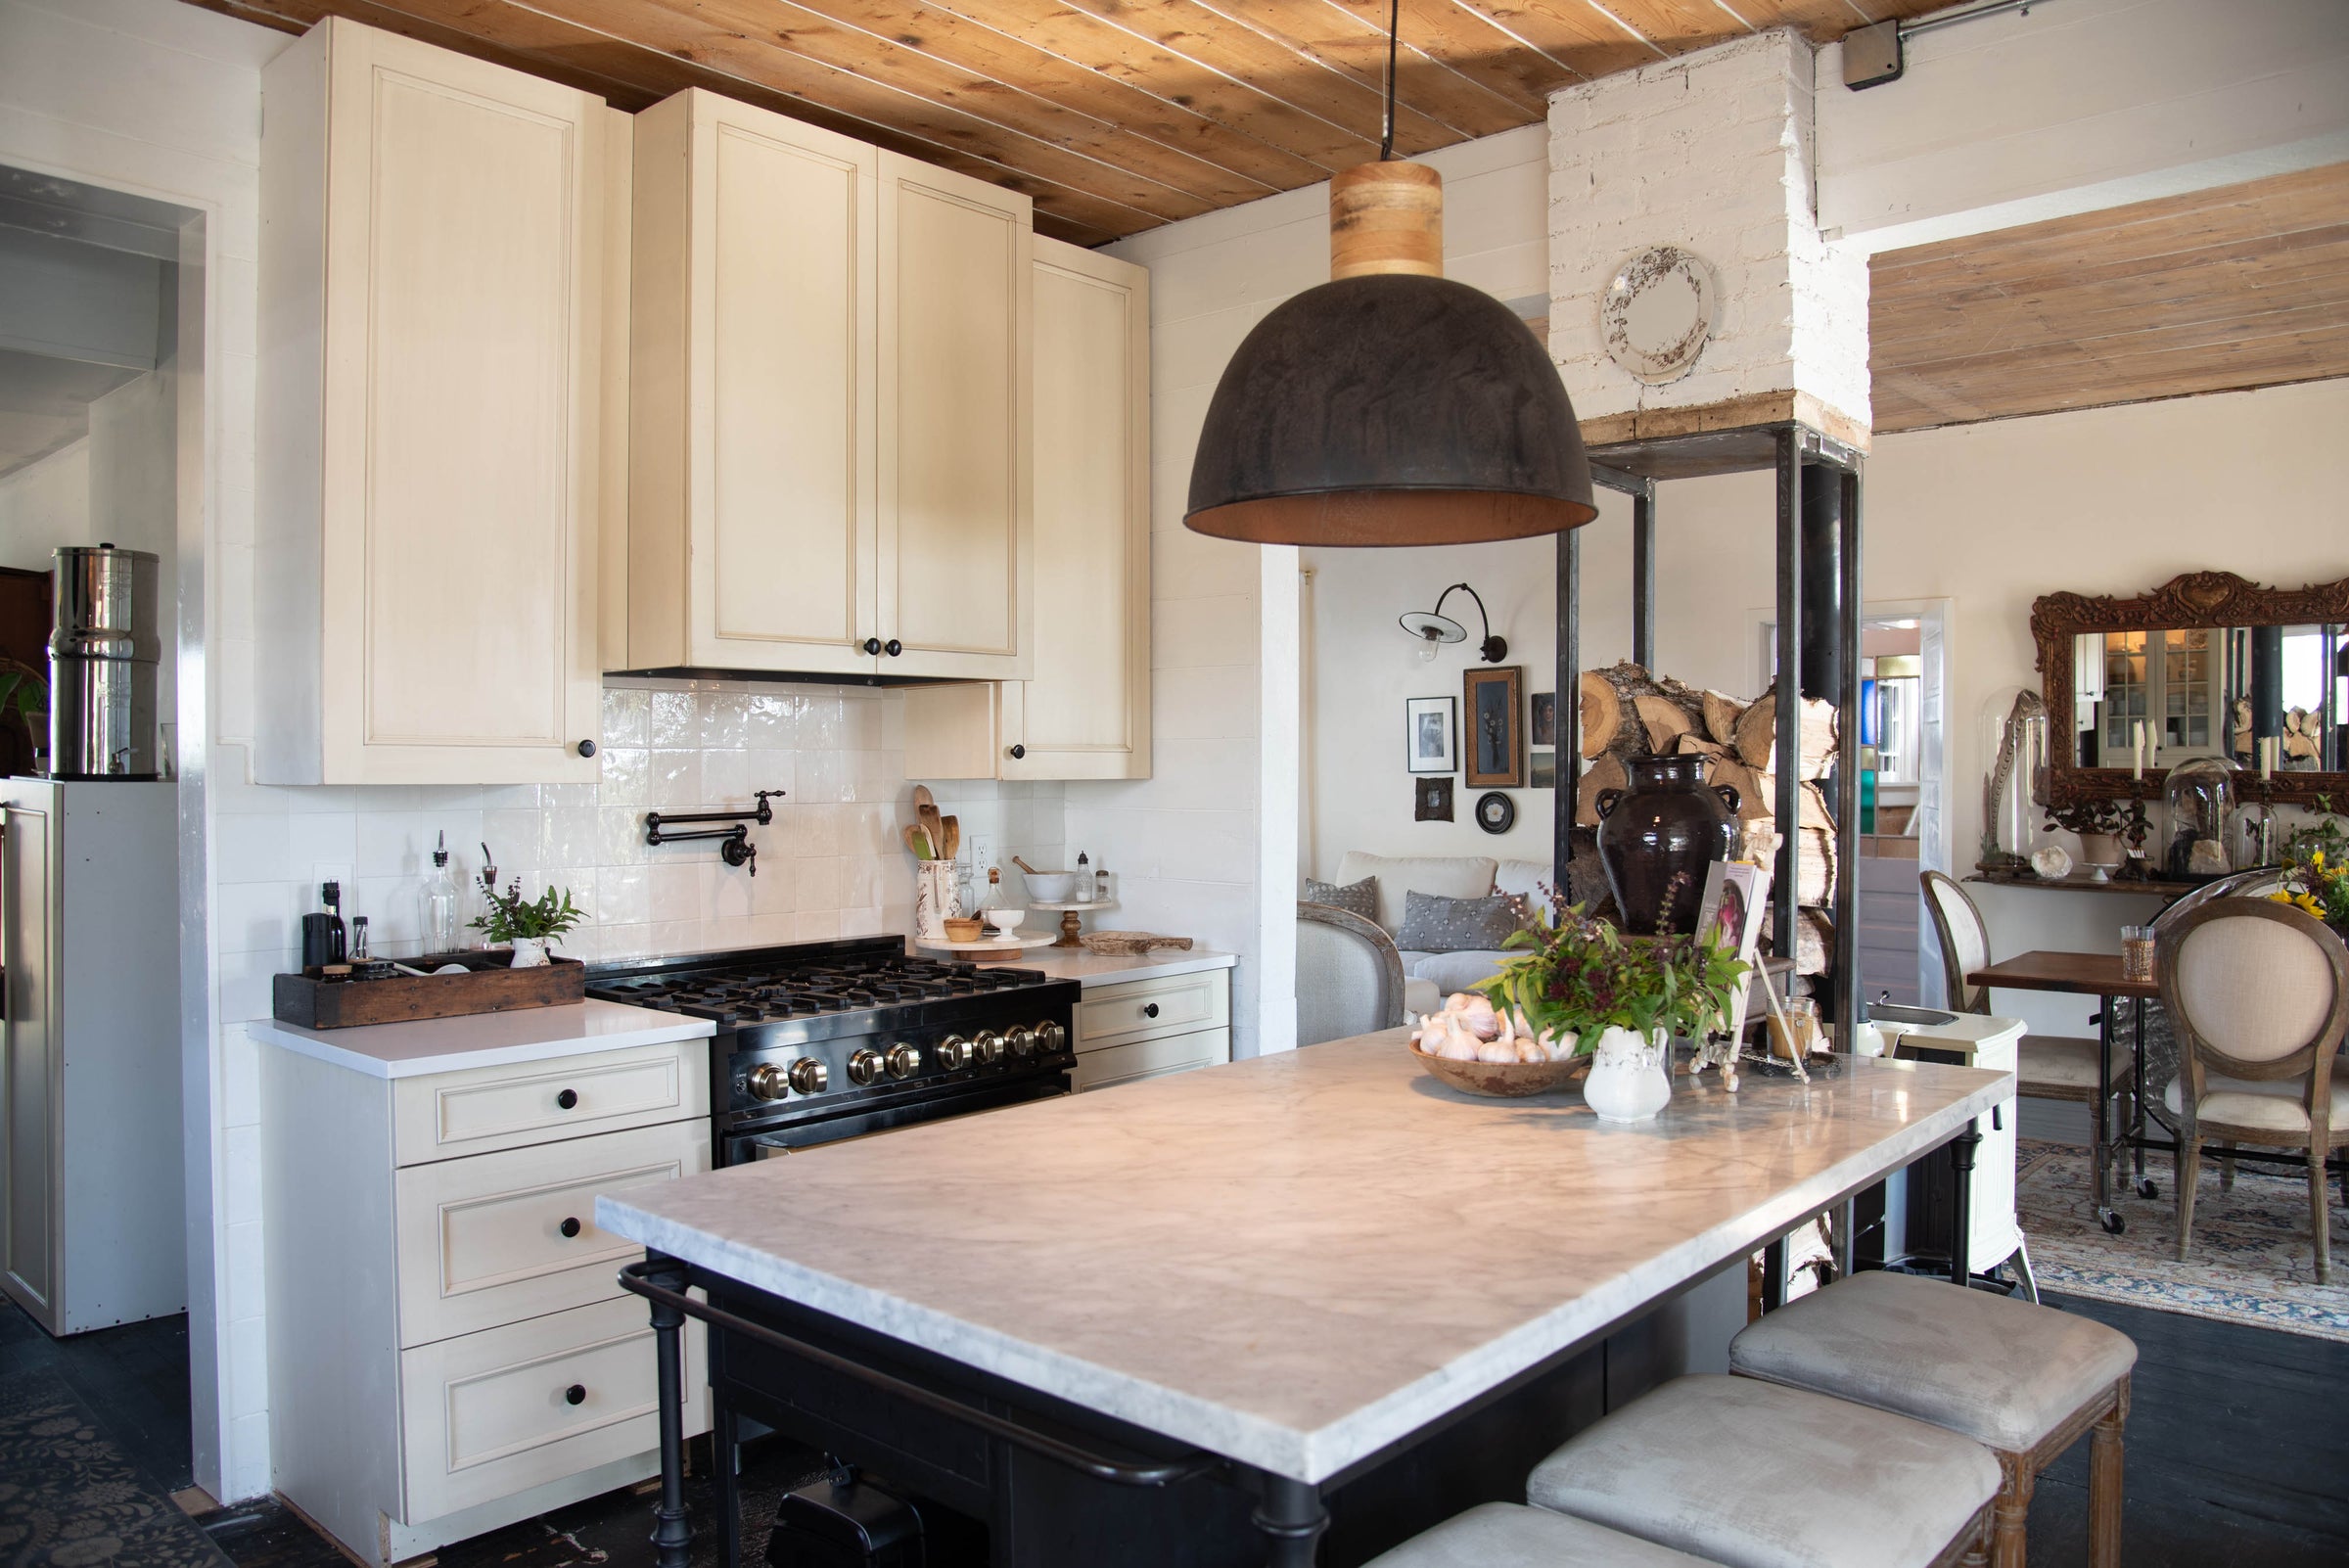 Hunter Moon Homestead kitchen after renovation